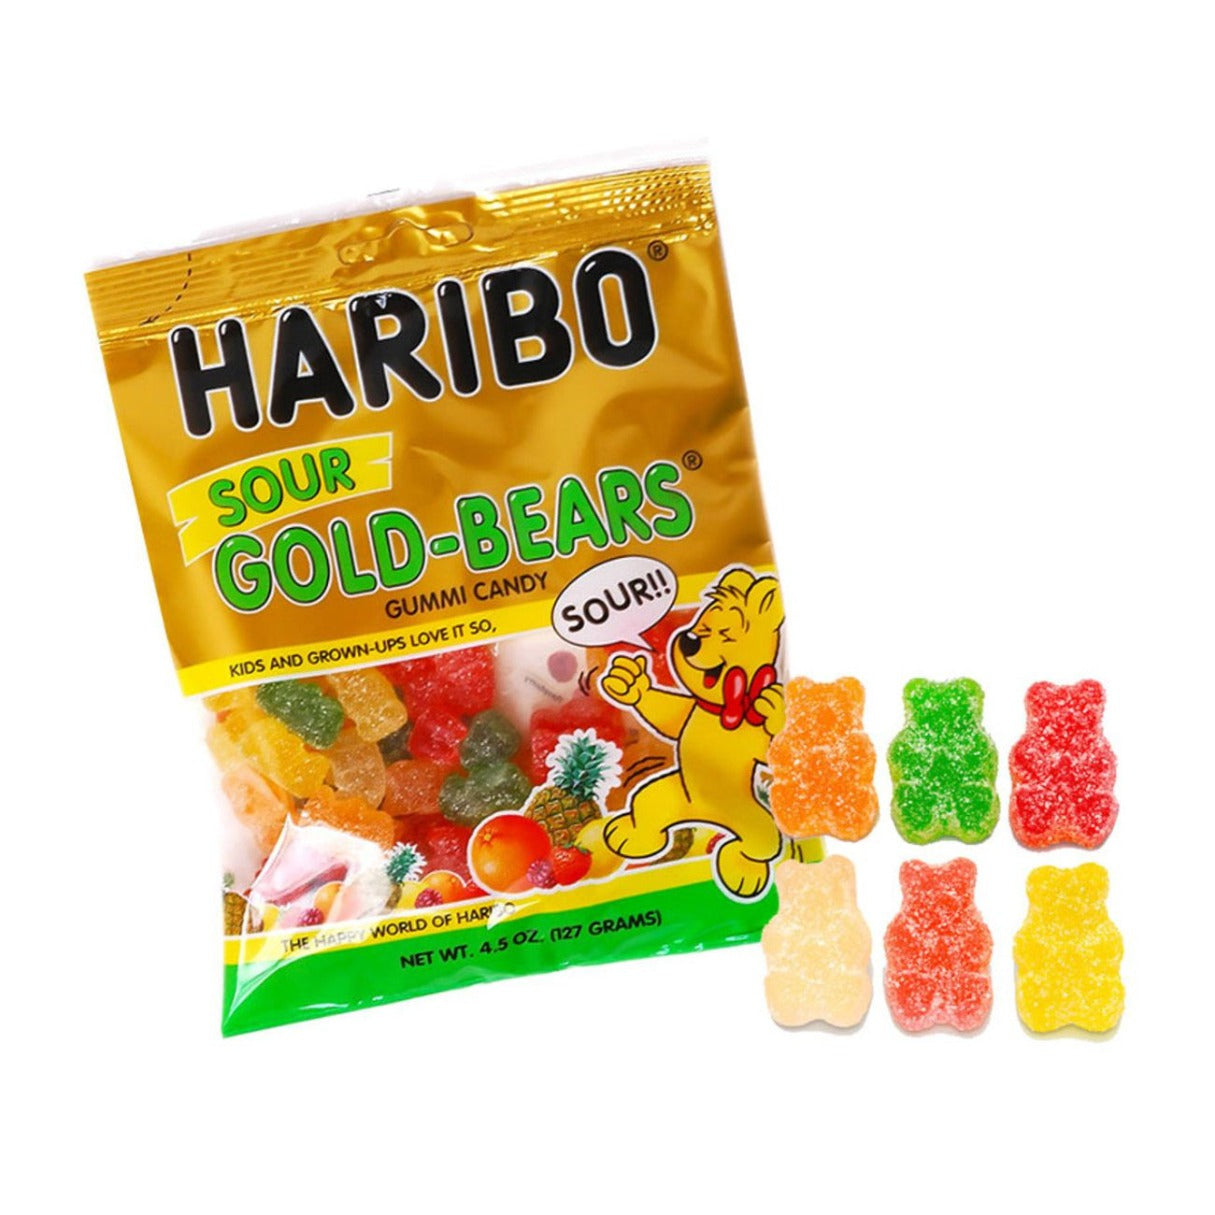 Haribo Sour Gold Bears Gummi Candy 4.5oz - 12ct